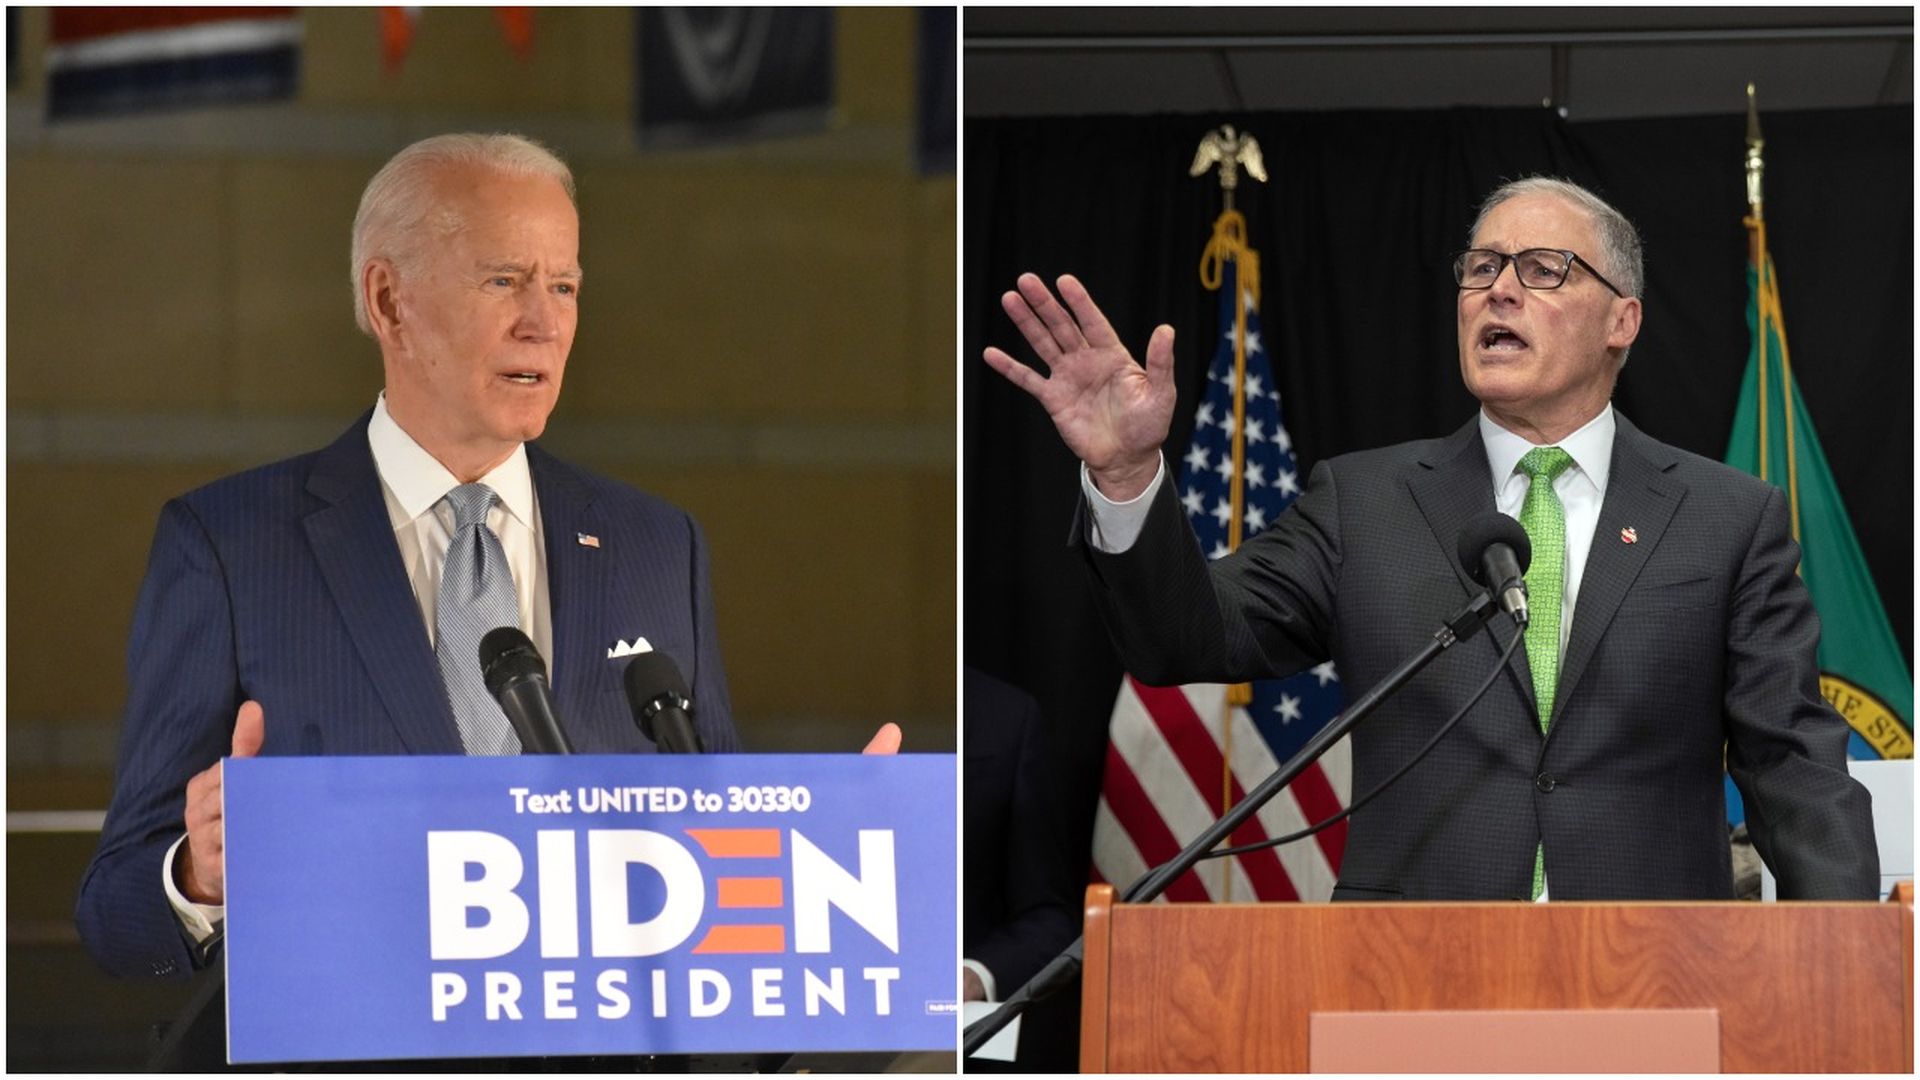 Former Vice President Joe Biden and Washington Governor Jay Inslee